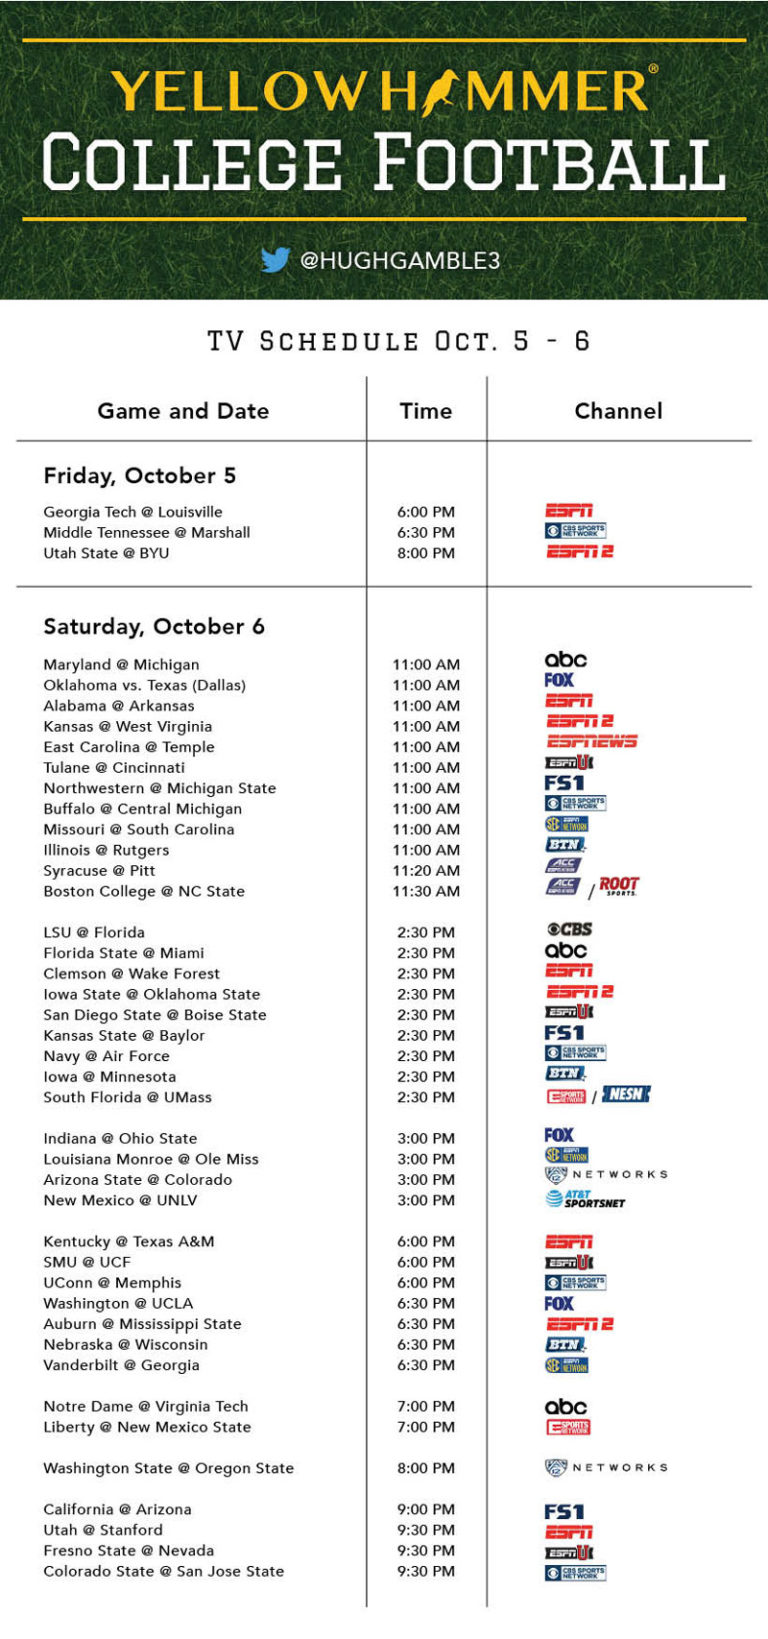 This weekend’s comprehensive college football TV schedule